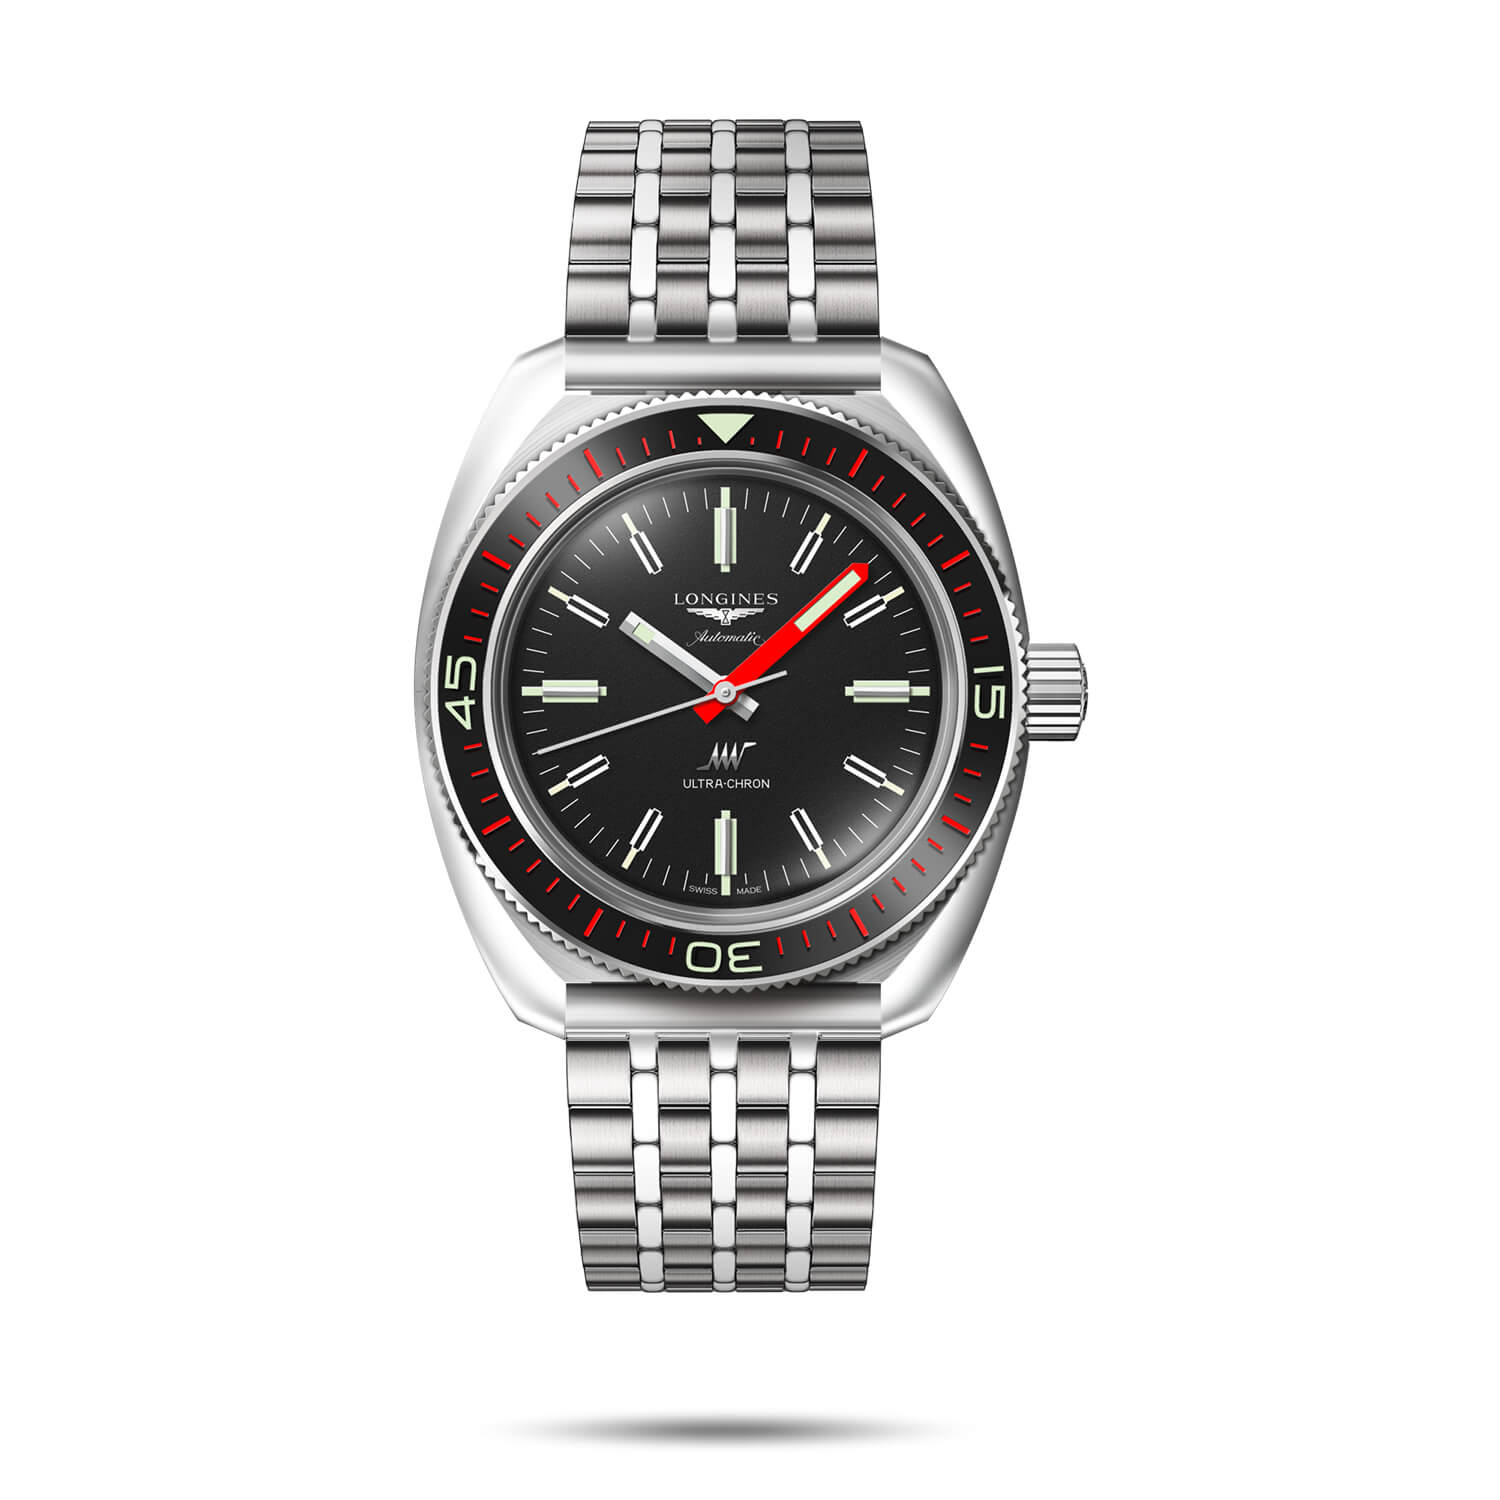 Photos - Wrist Watch Longines Diving Ultra - Chron Box Edition Bracelet Watch 